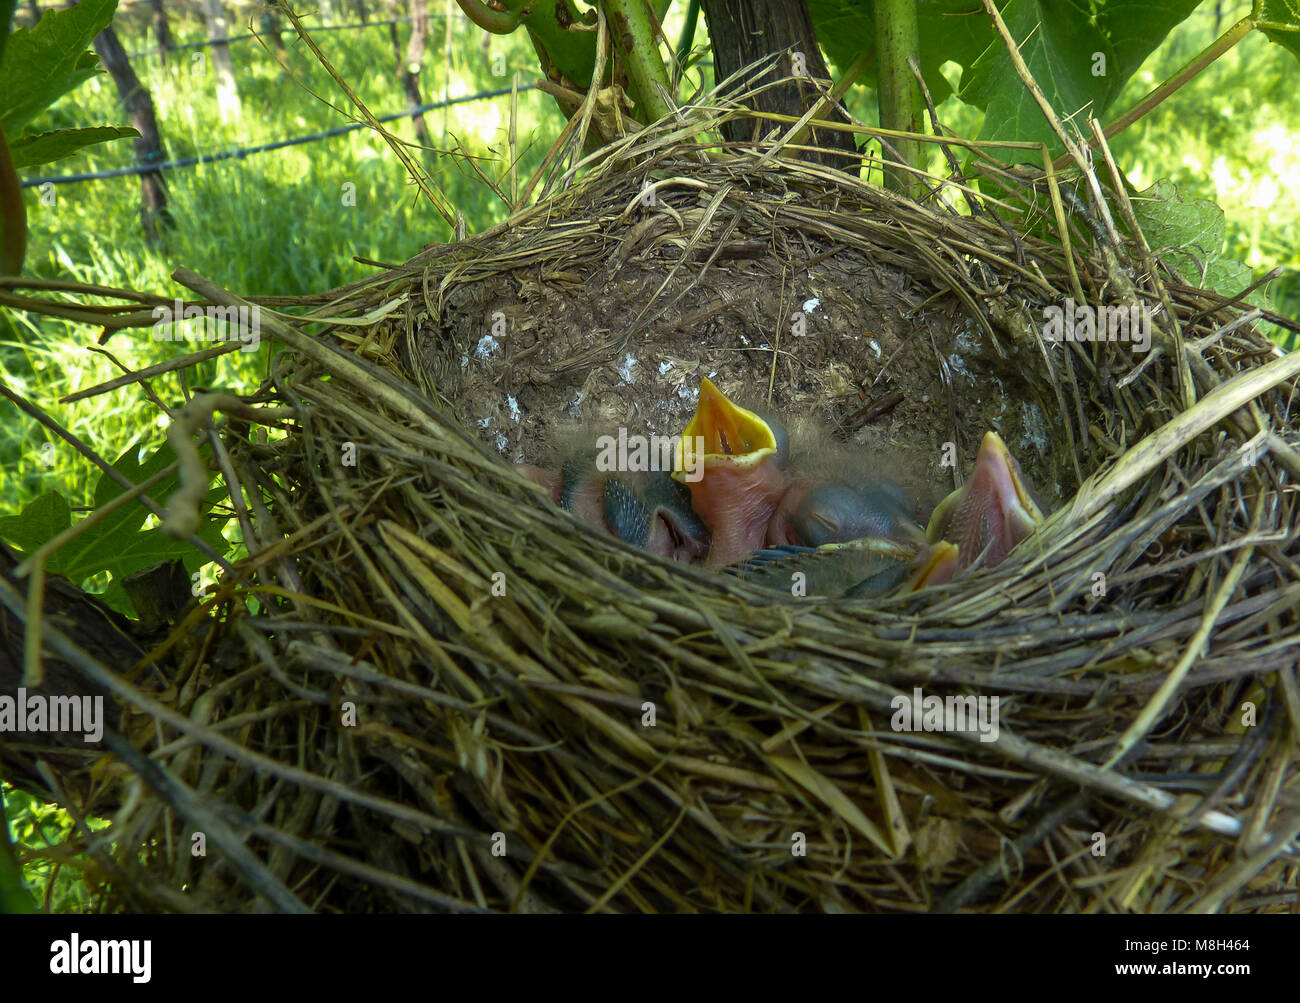 Turdus merula birds. birds in nest on a tree. Common Blackbird's nest with young birds. Stock Photo